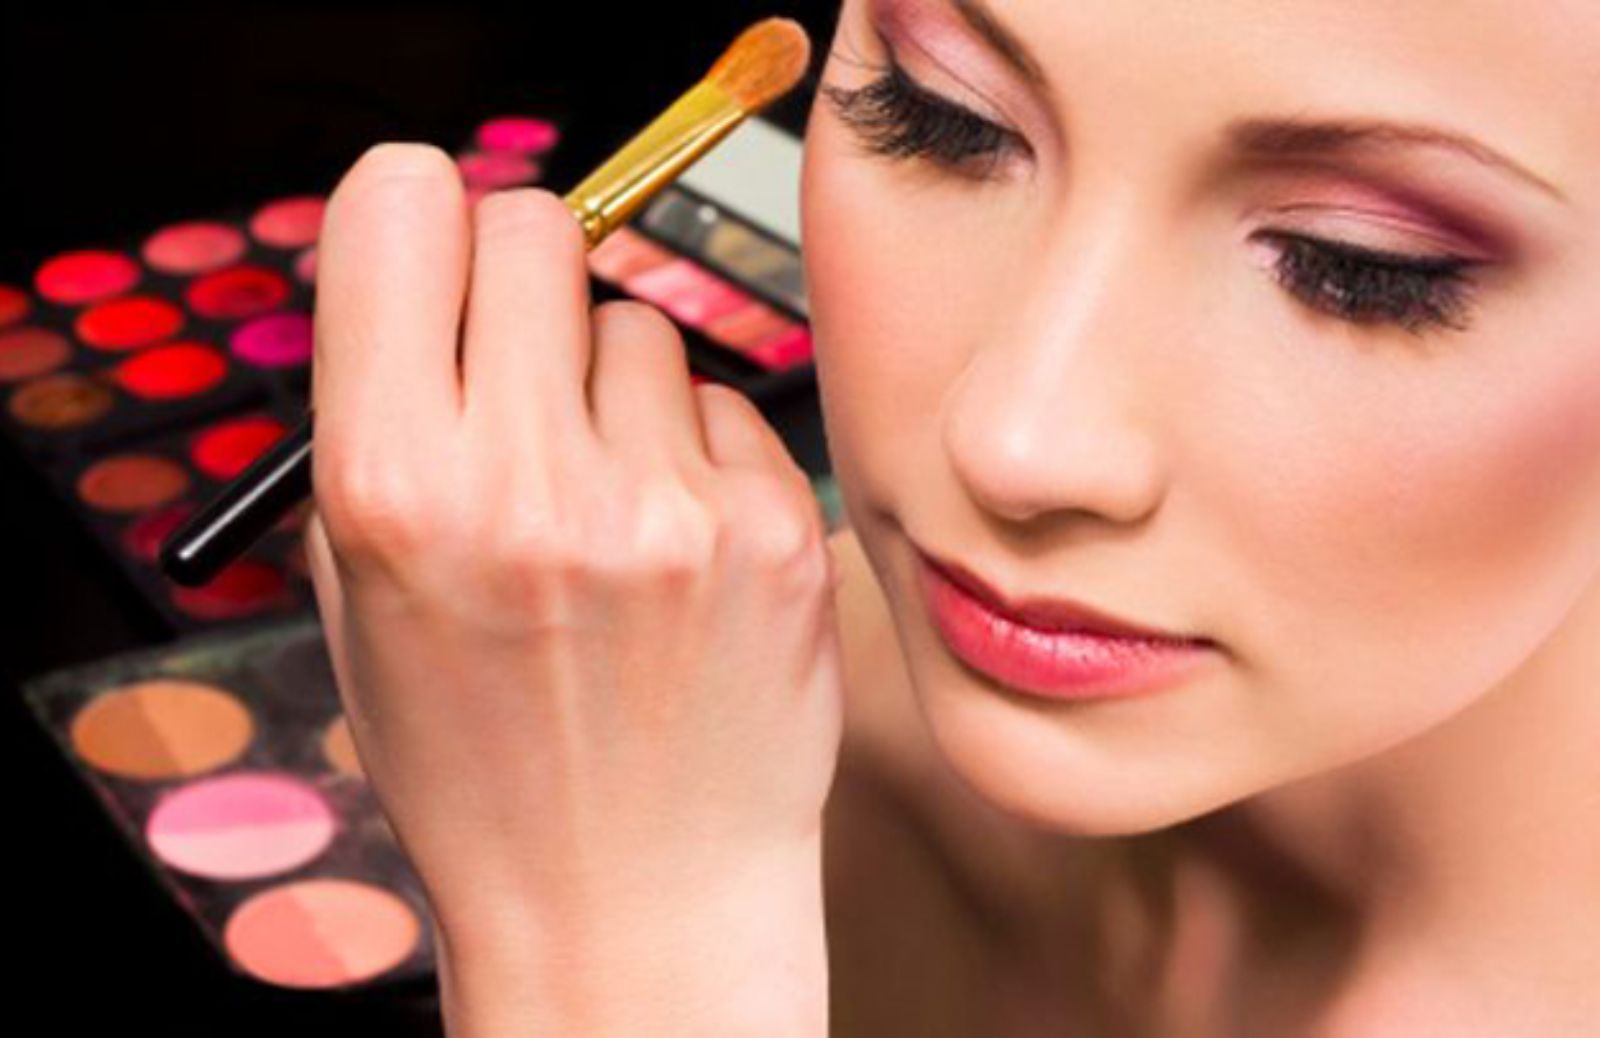 Le 5 regole per comprare cosmetici sicuri 